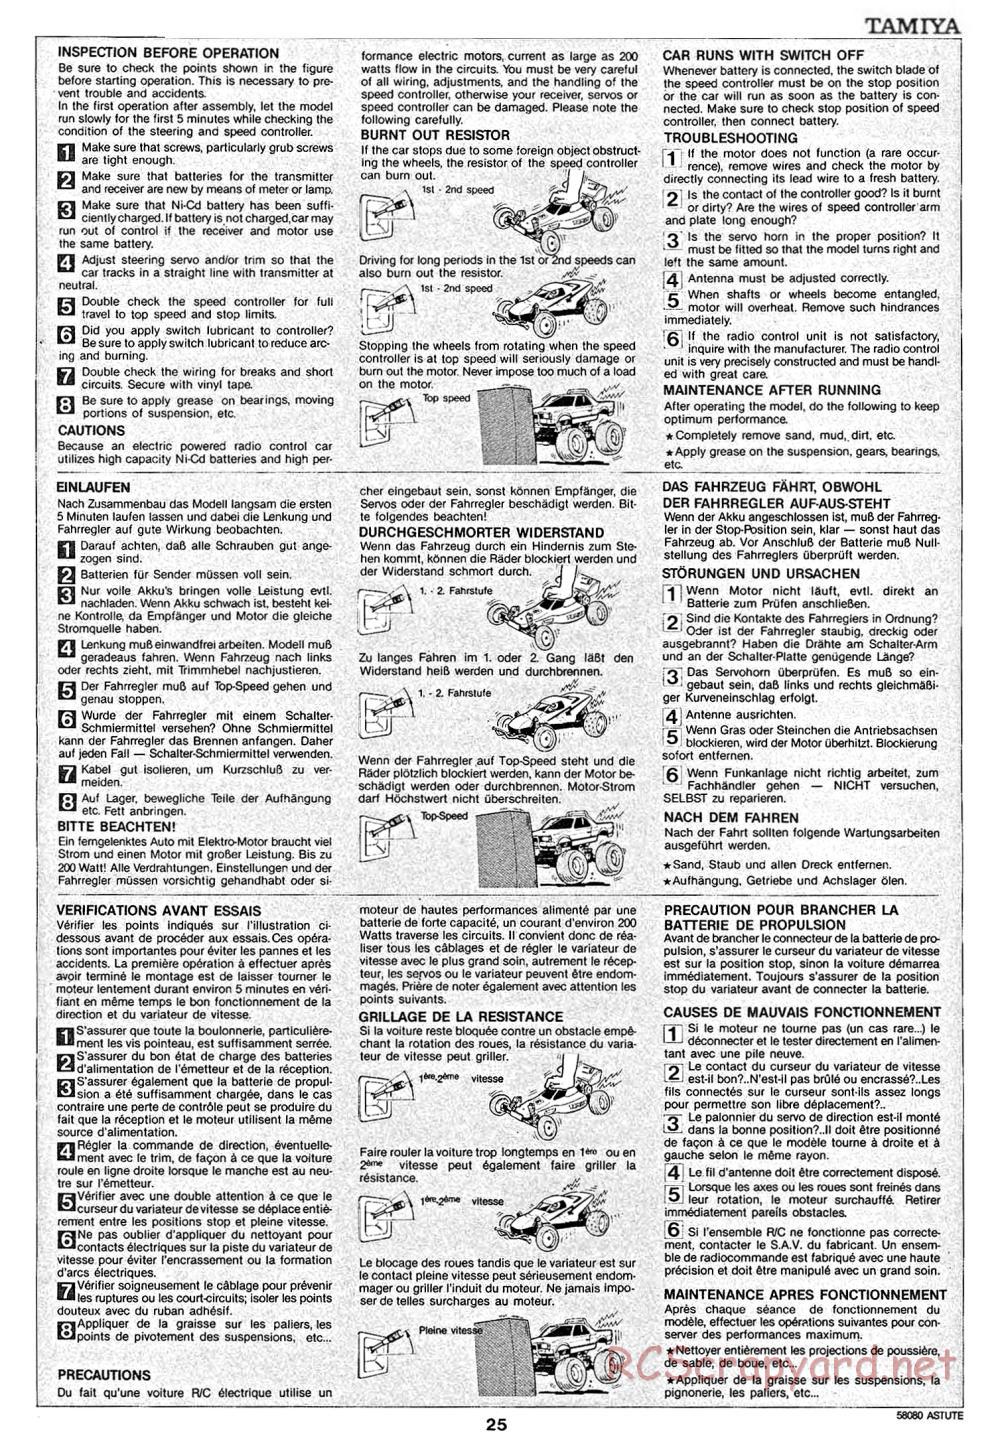 Tamiya - Astute - 58080 - Manual - Page 25